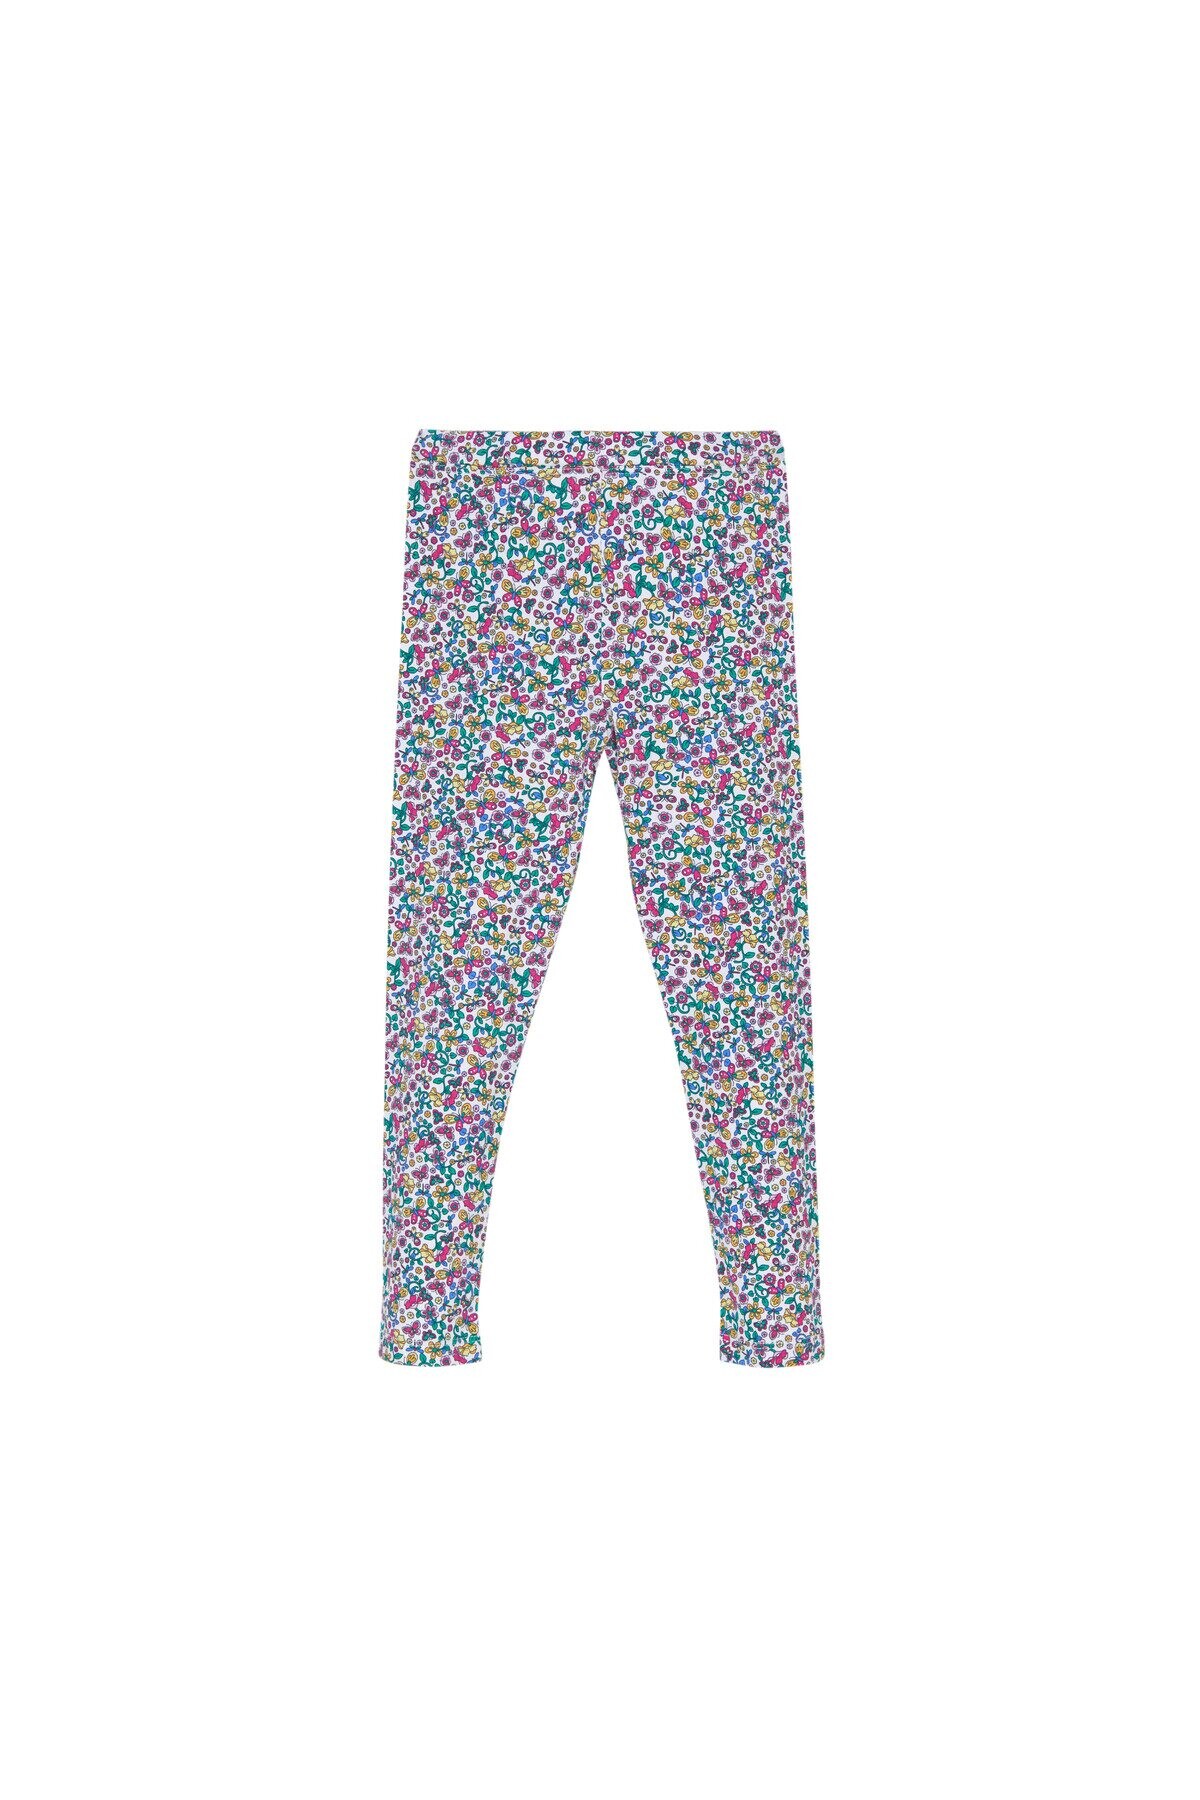 https://b2b.lovetti.com/5-8-years-old-tiny-butterfly-pattern-legging-girls-patterned-legging-lovetti-8062-25-B.jpg